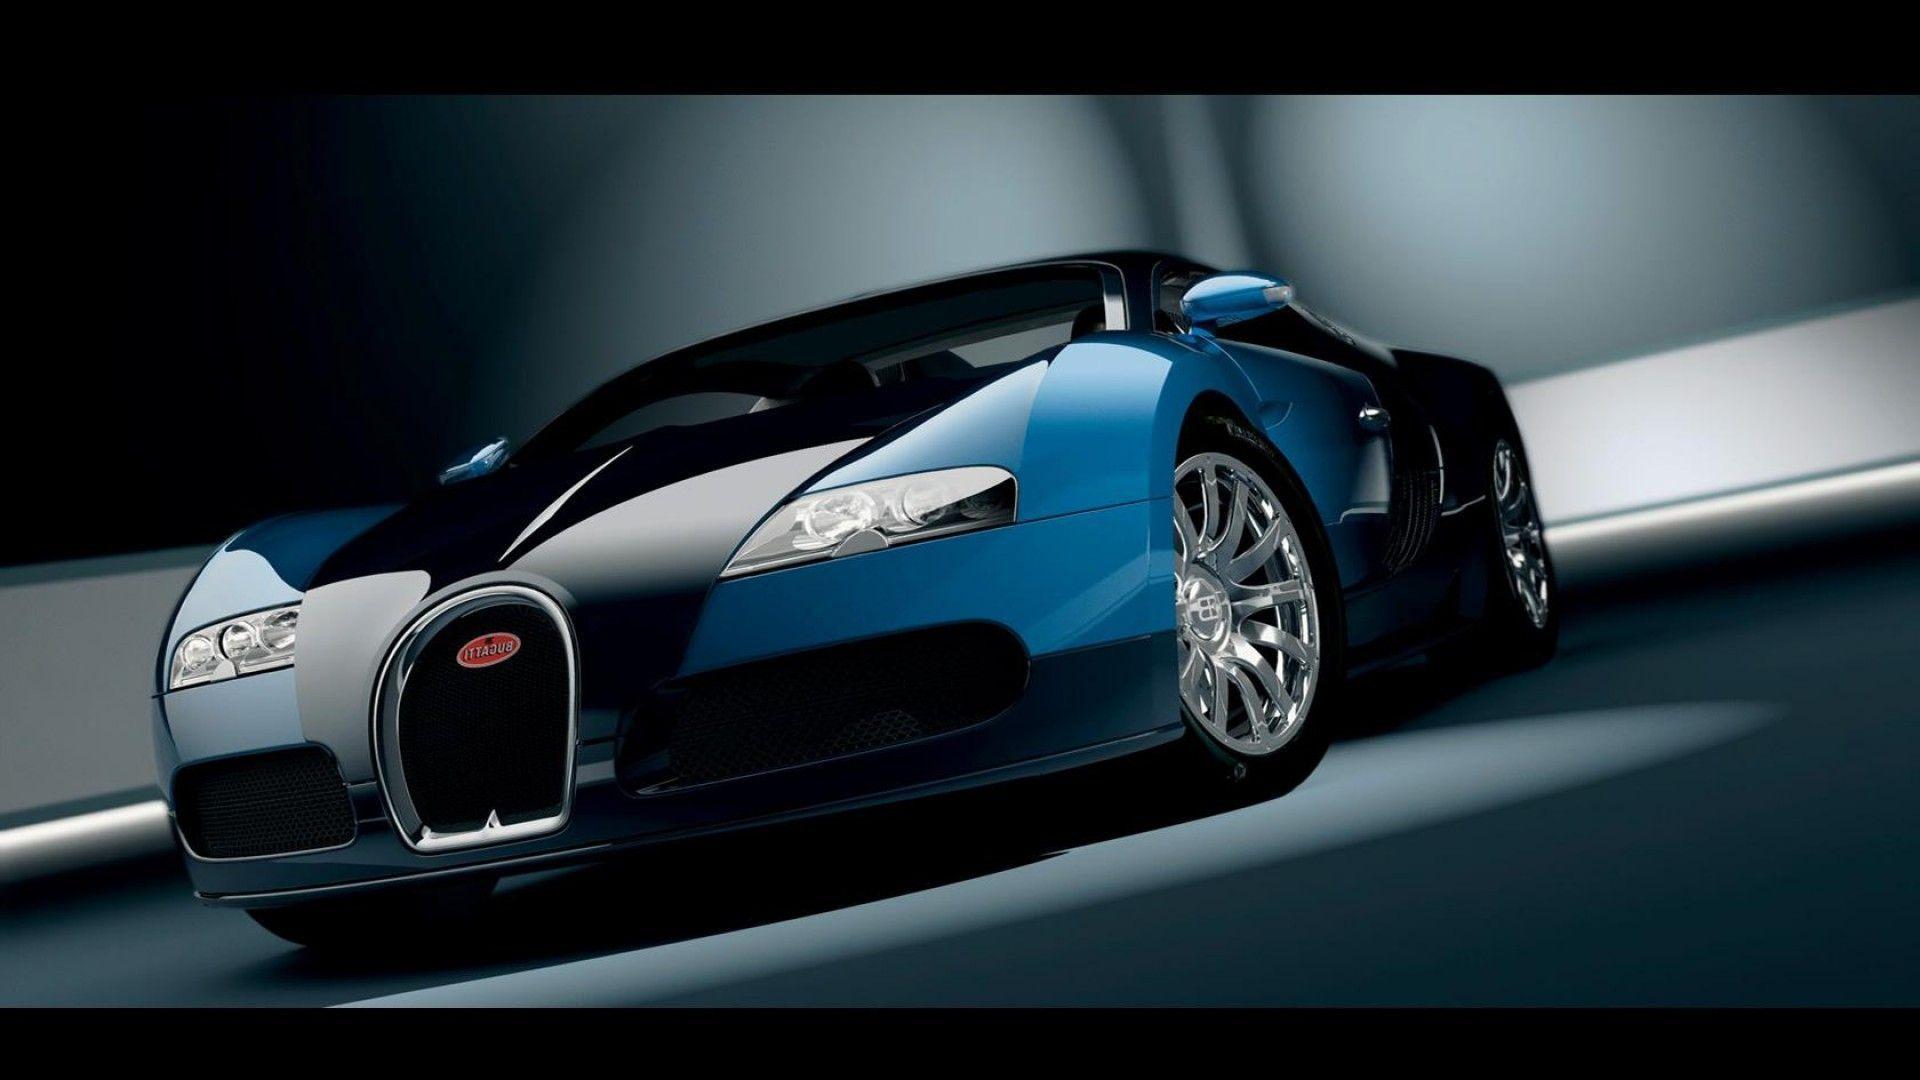 78+] Bugatti Veyron Wallpaper Hd - WallpaperSafari